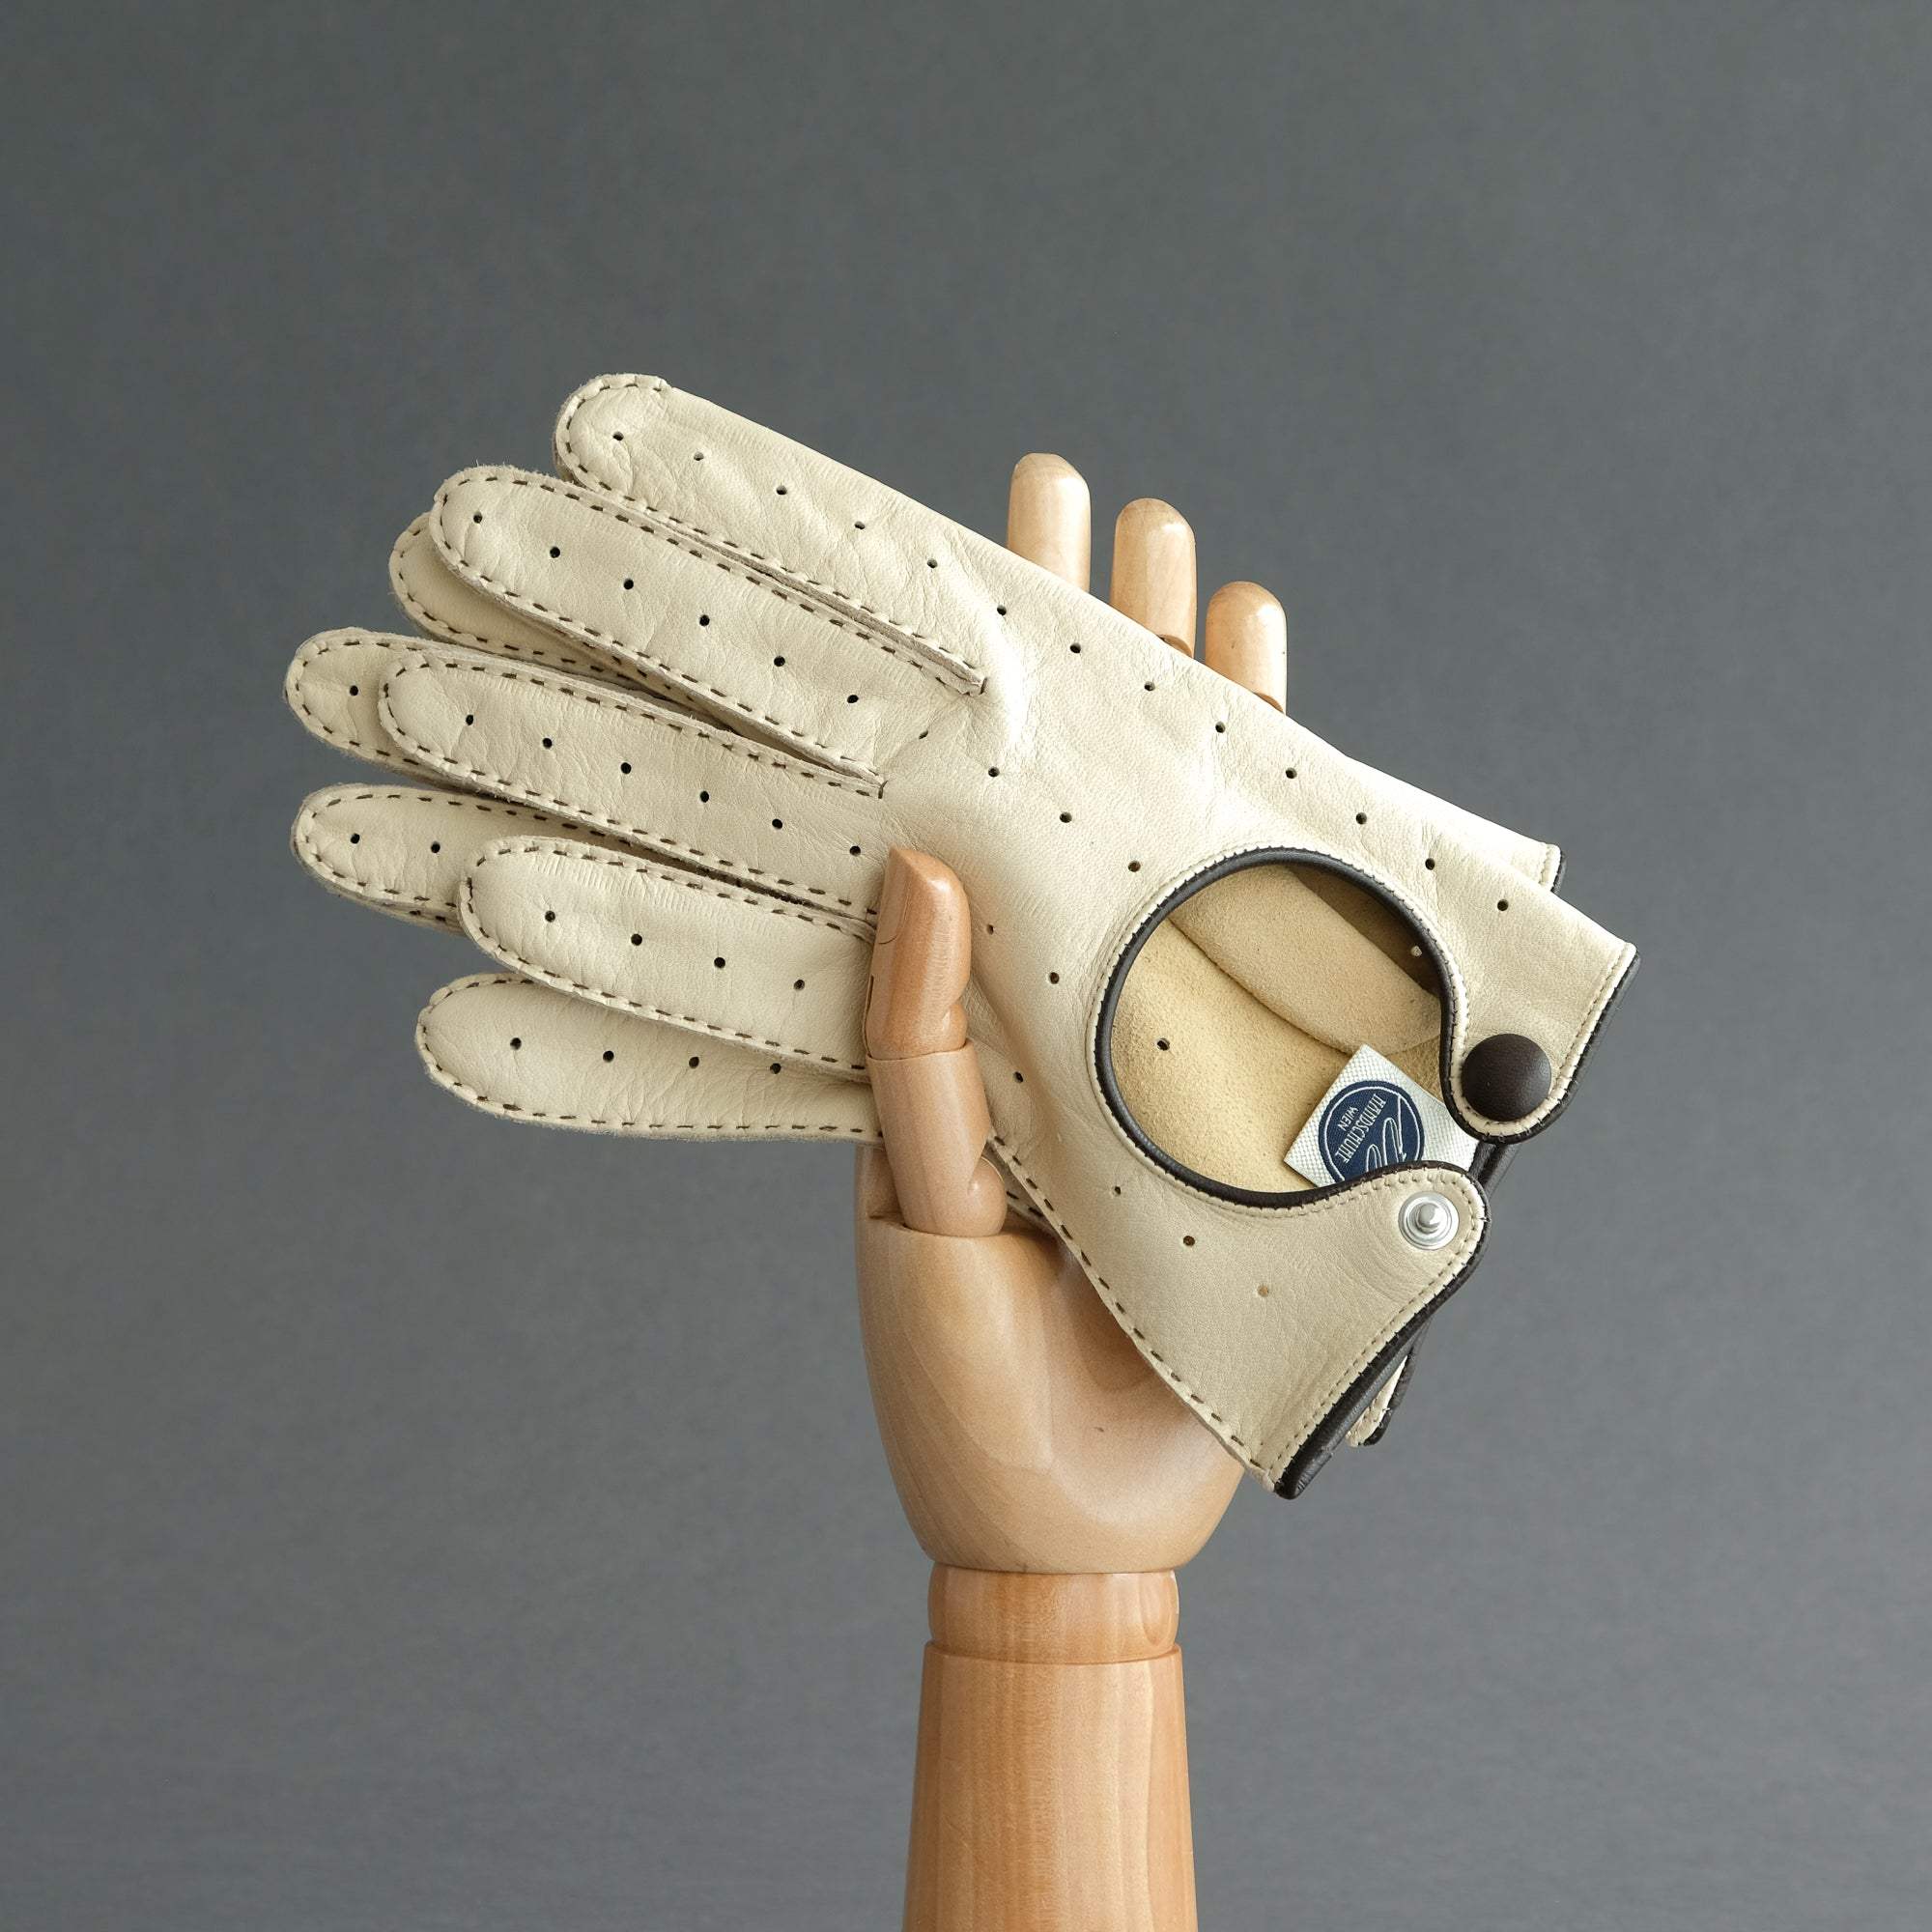 Gentlemen's Unlined Driving Gloves from Beige Deerskin - TR Handschuhe Wien - Thomas Riemer Handmade Gloves